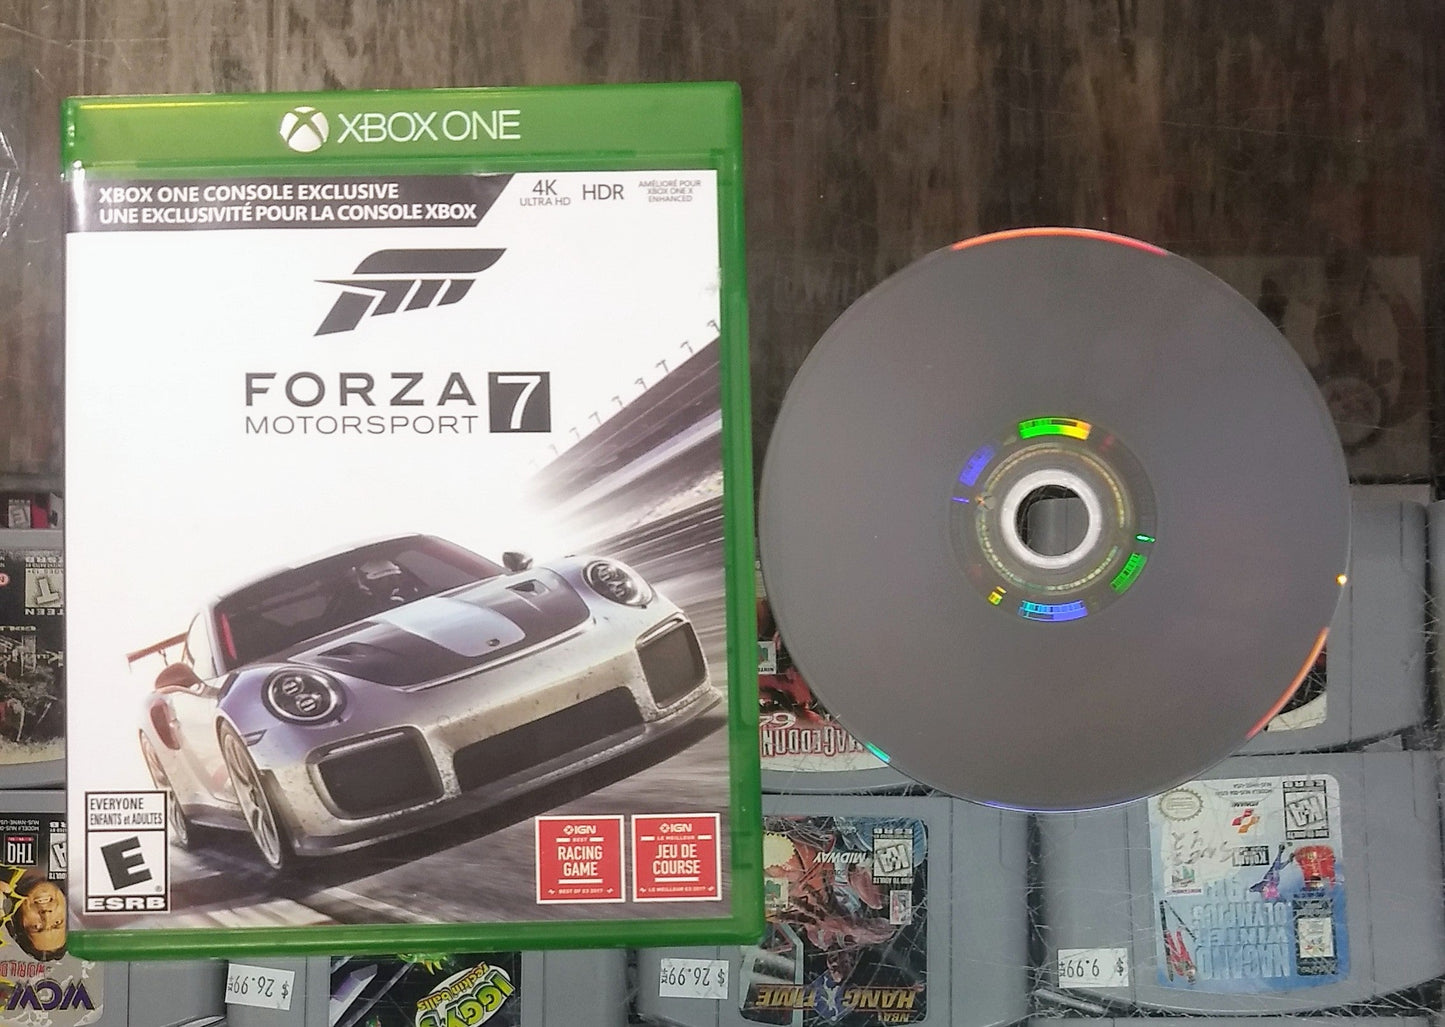 FORZA MOTORSPORT 7  (XBOX ONE XONE) - jeux video game-x